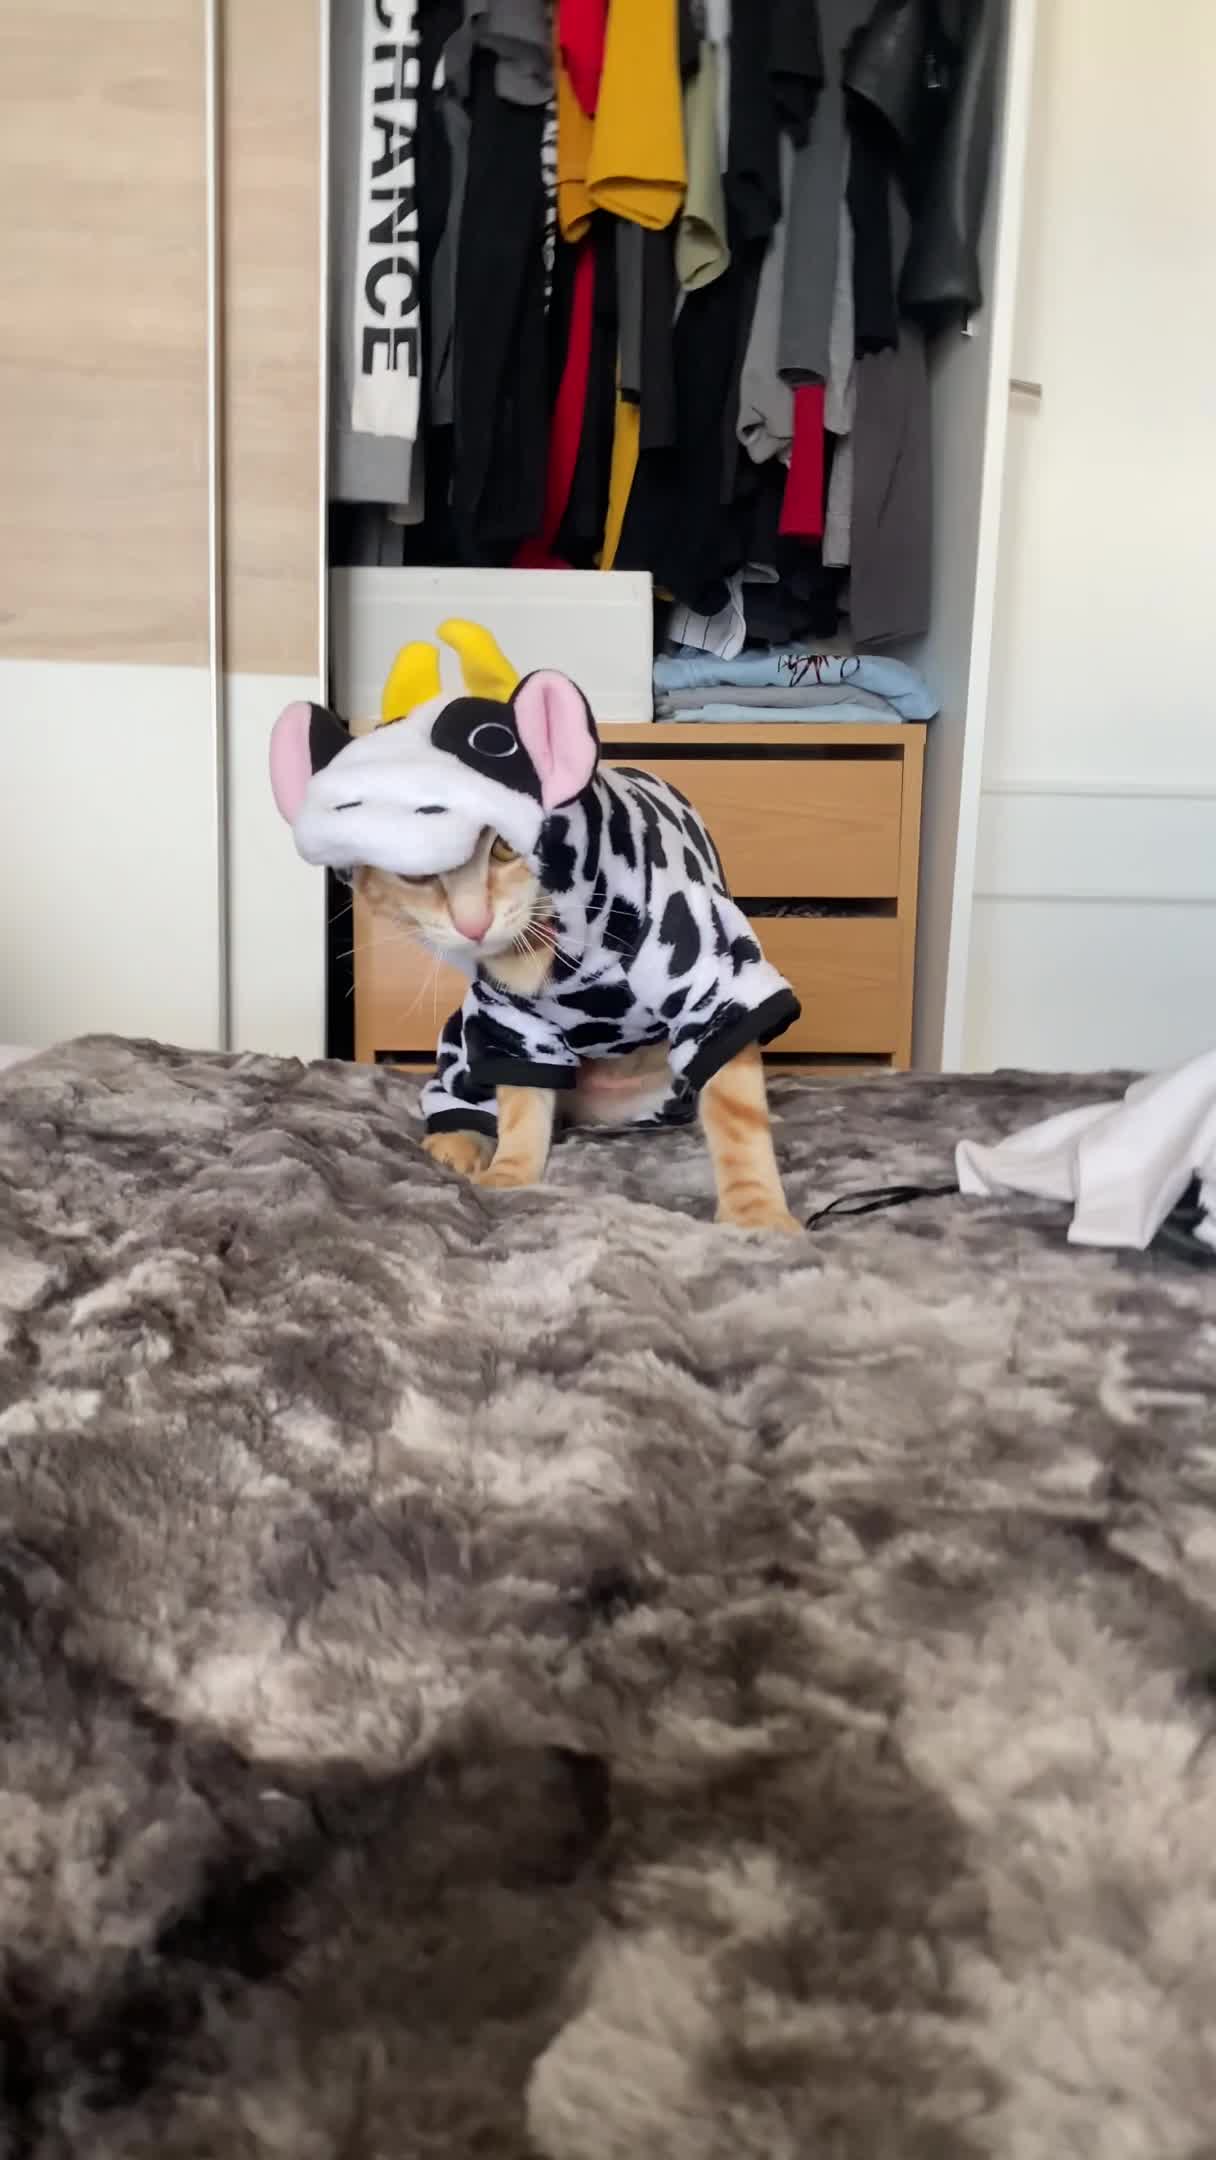 Orange Cat Falls Off Bed Wearing Cow Costume